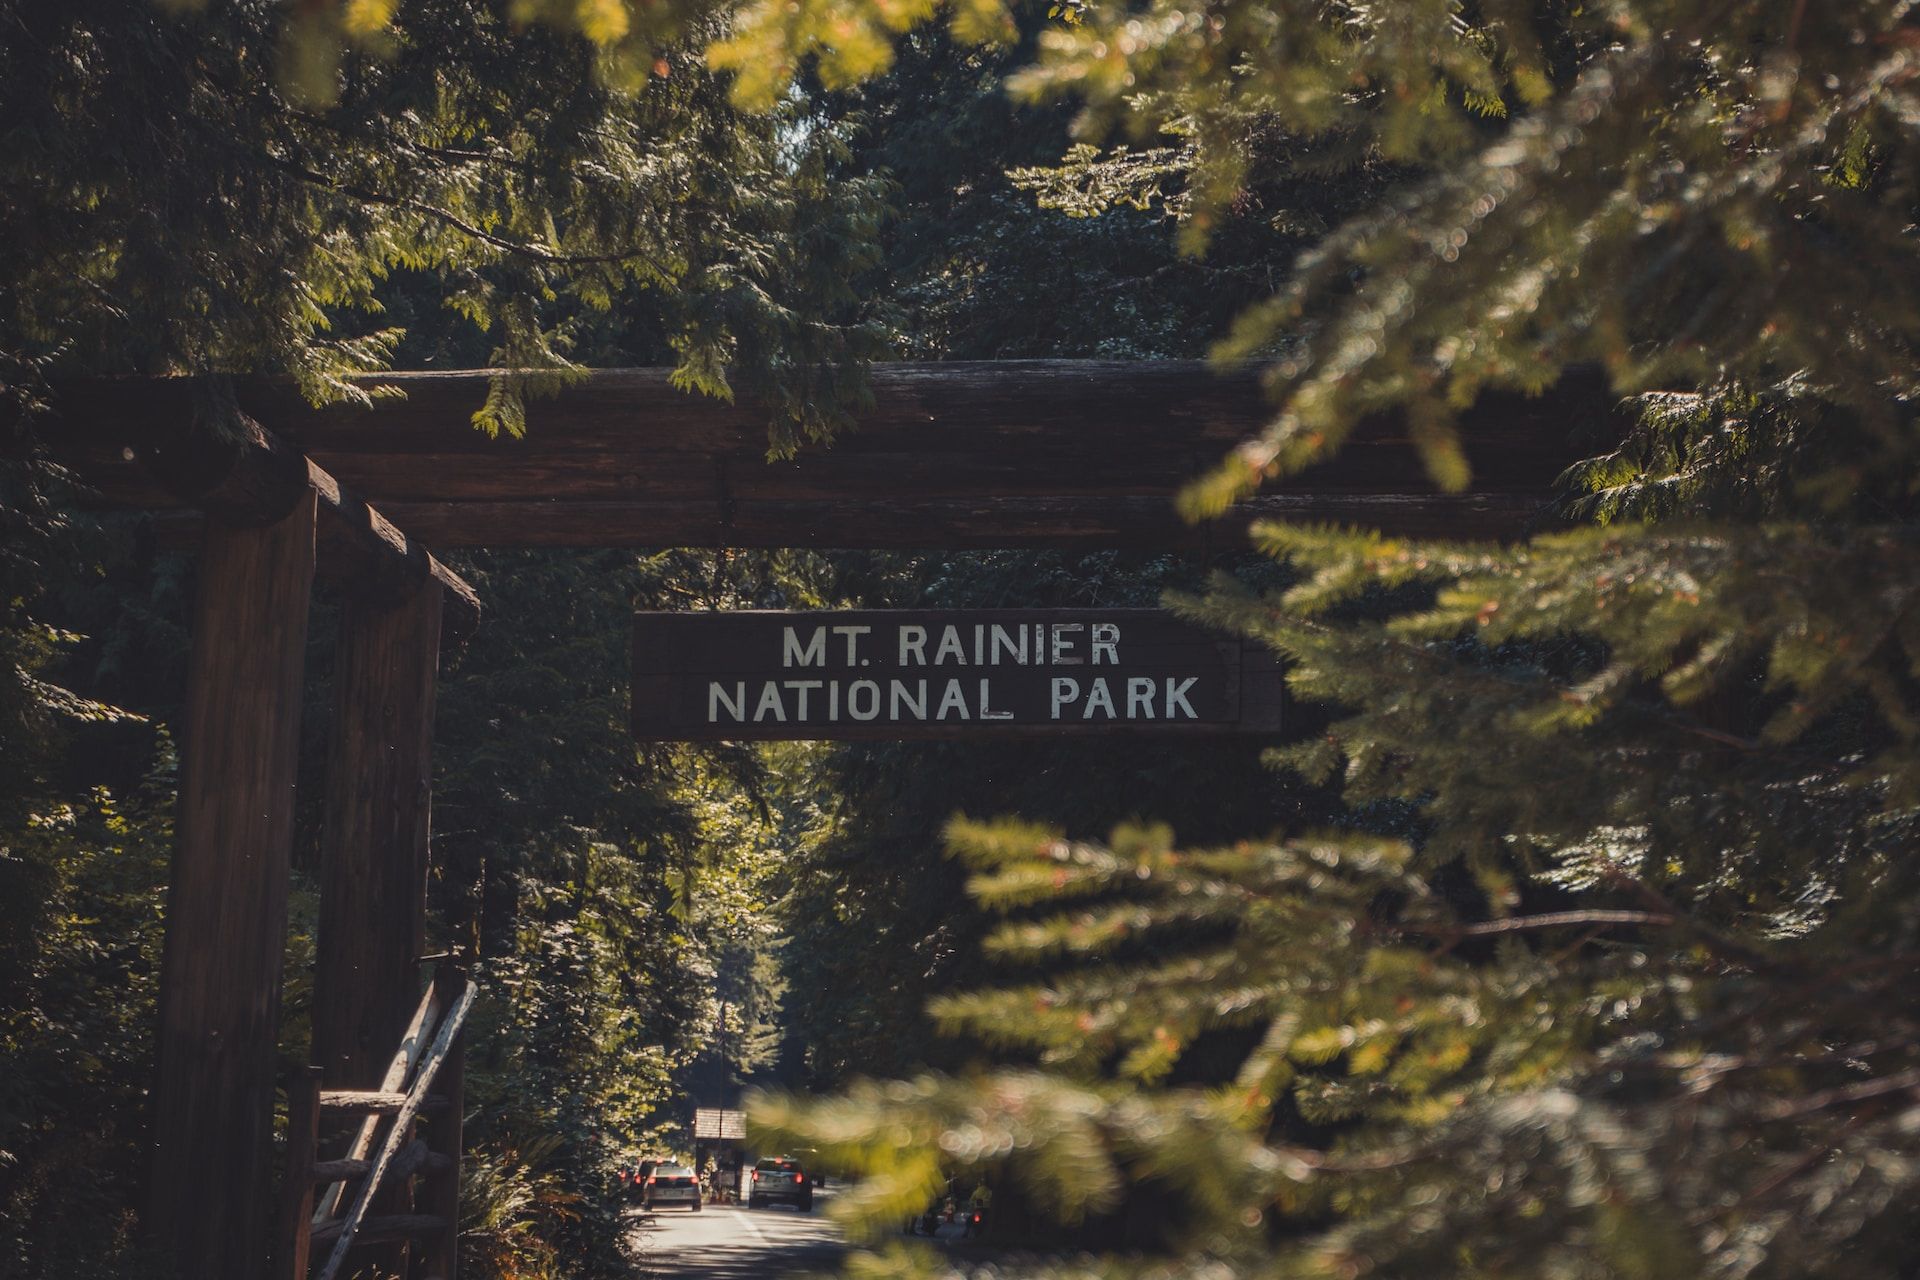 A sign for Mt Rainier National Park